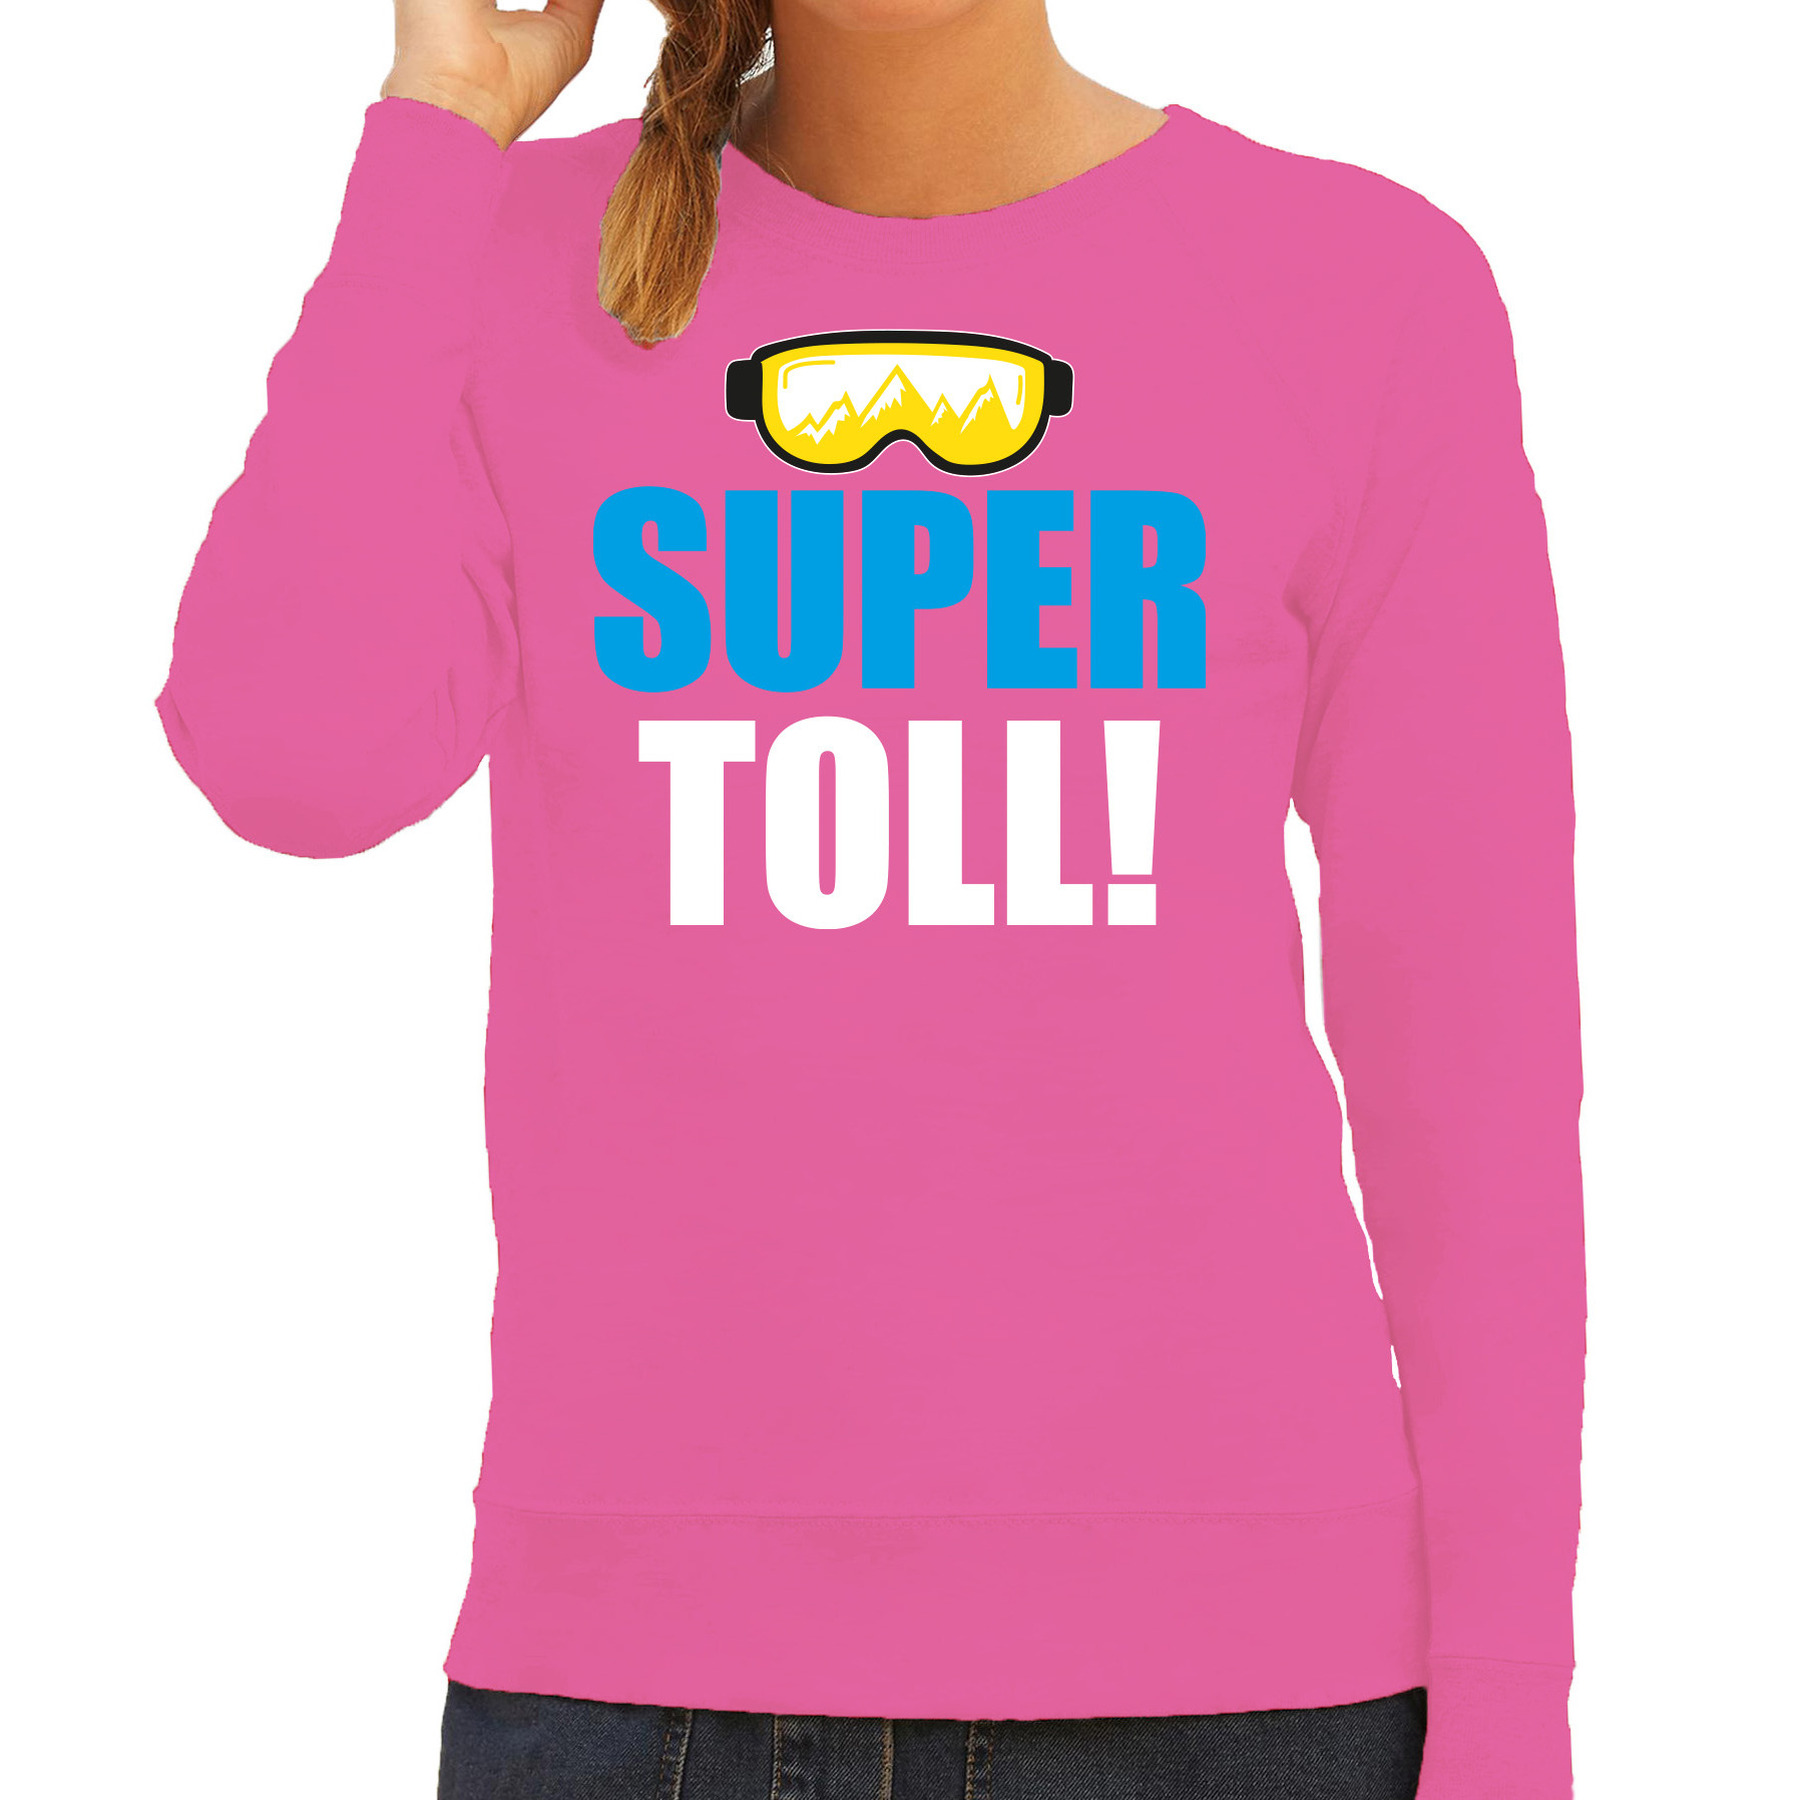 Apres ski sweater-trui voor dames super toll roze wintersport skien